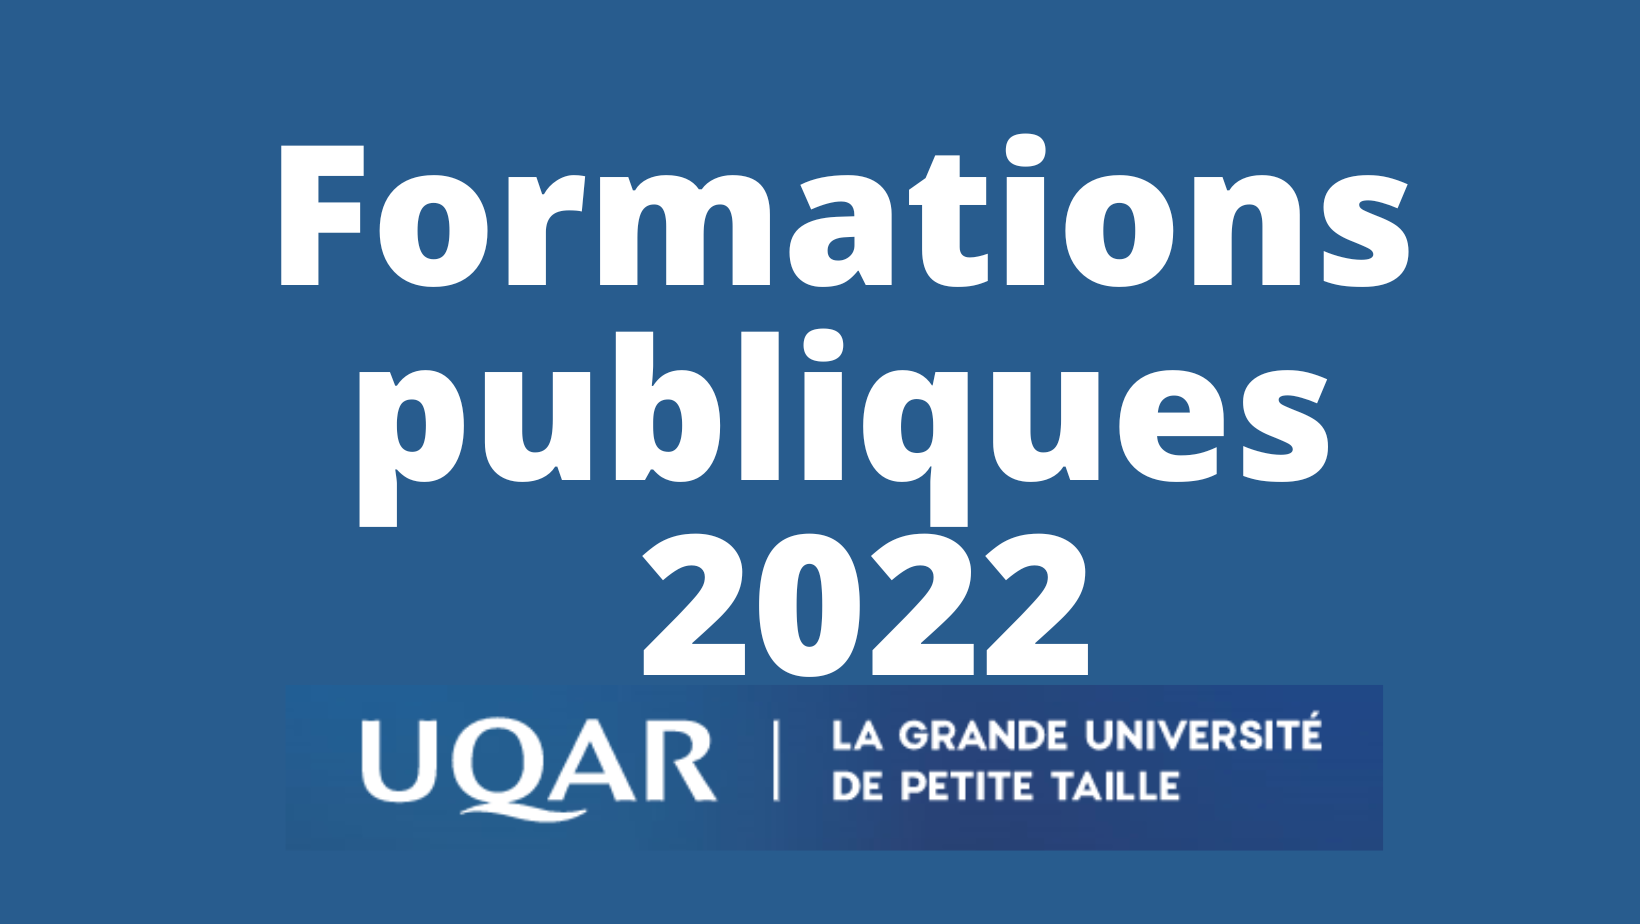 Formations publiques UQAR 2022